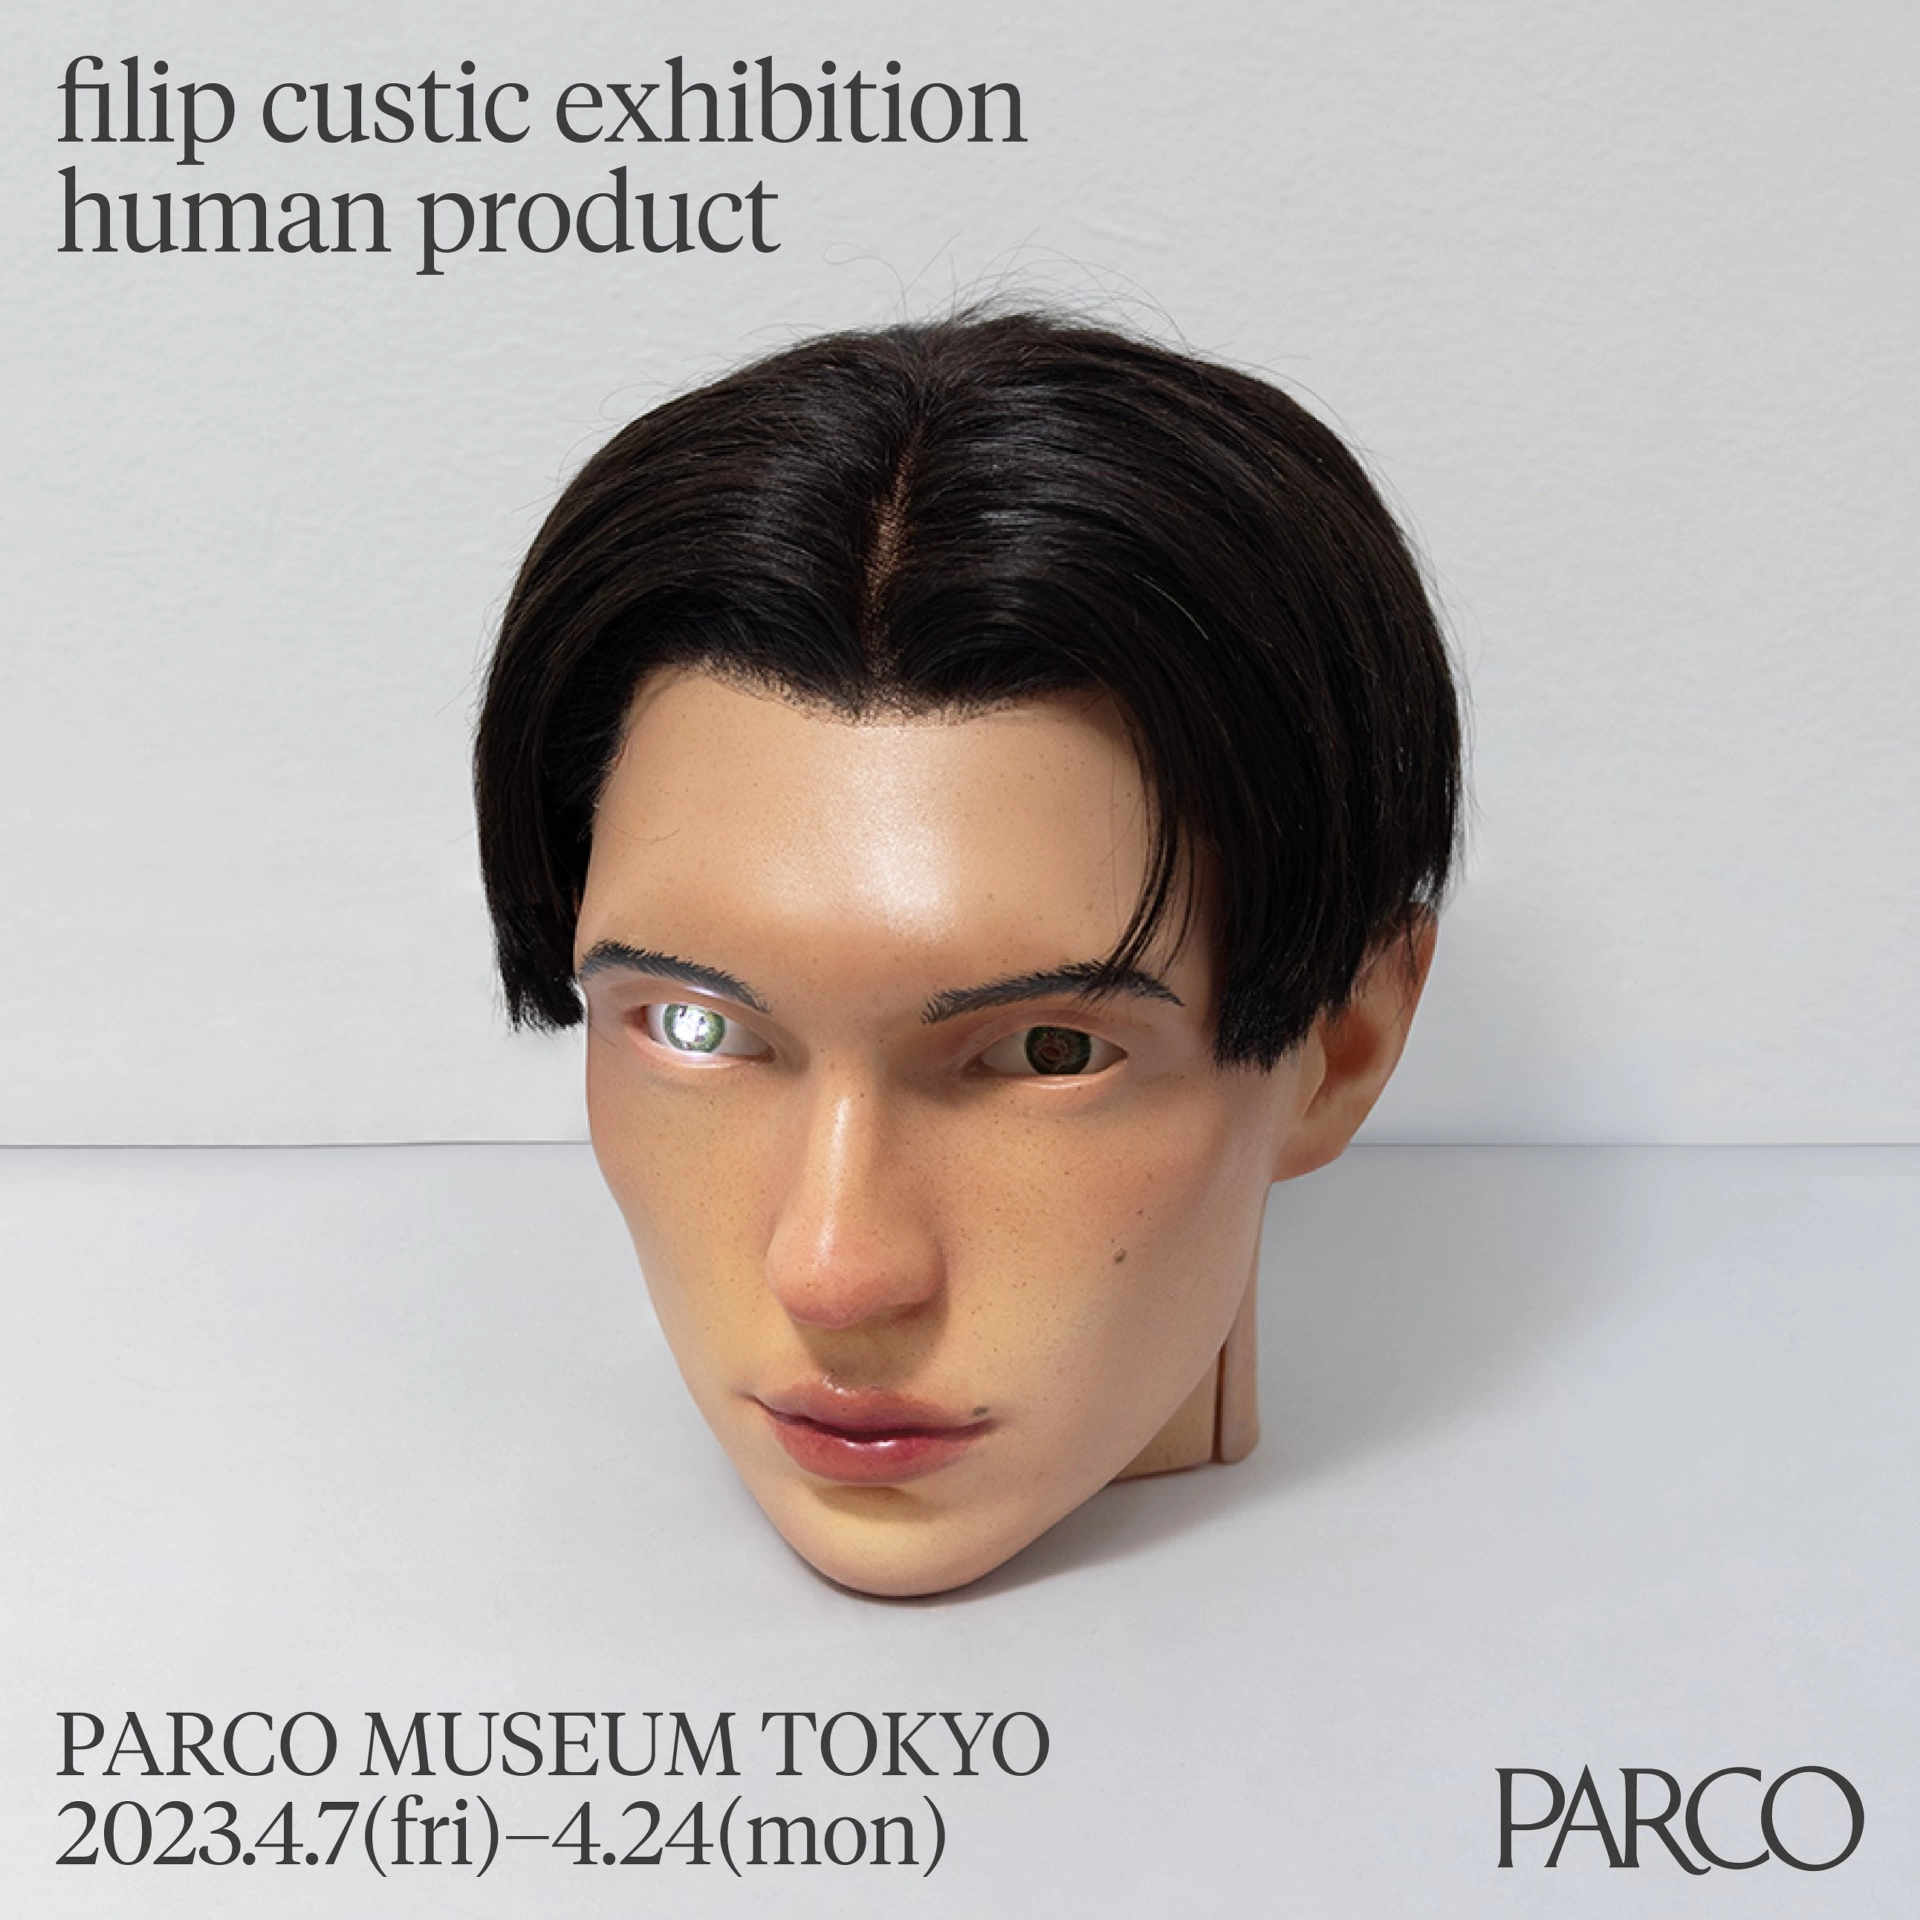 filip custic exhibition “human product”